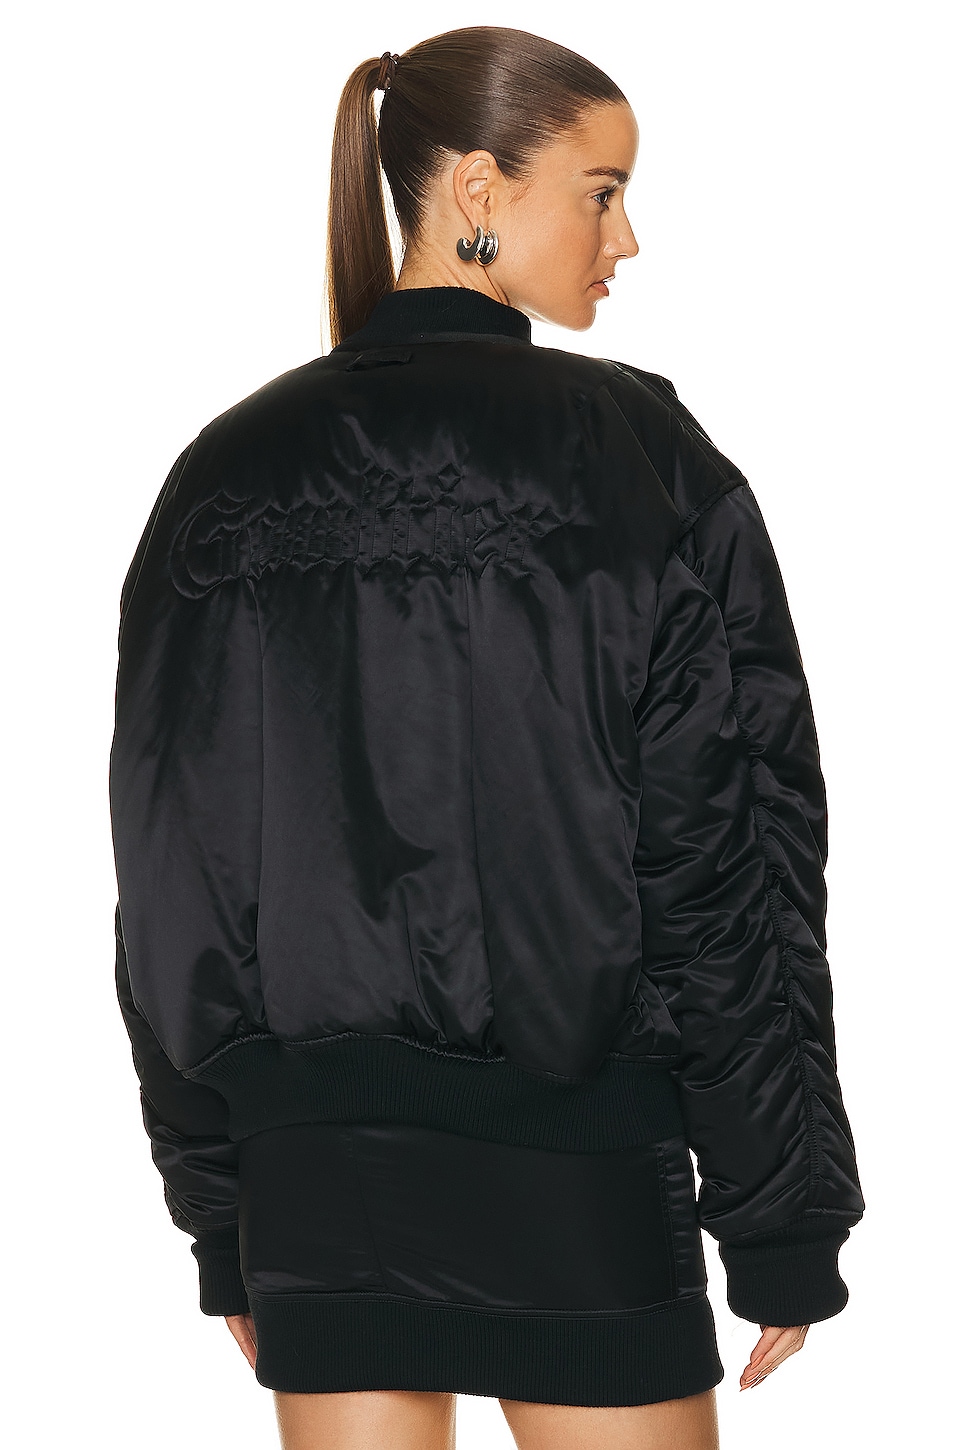 Куртка Jean Paul Gaultier Embroidered Oversize Bomber, черный куртка paul smith bomber черный